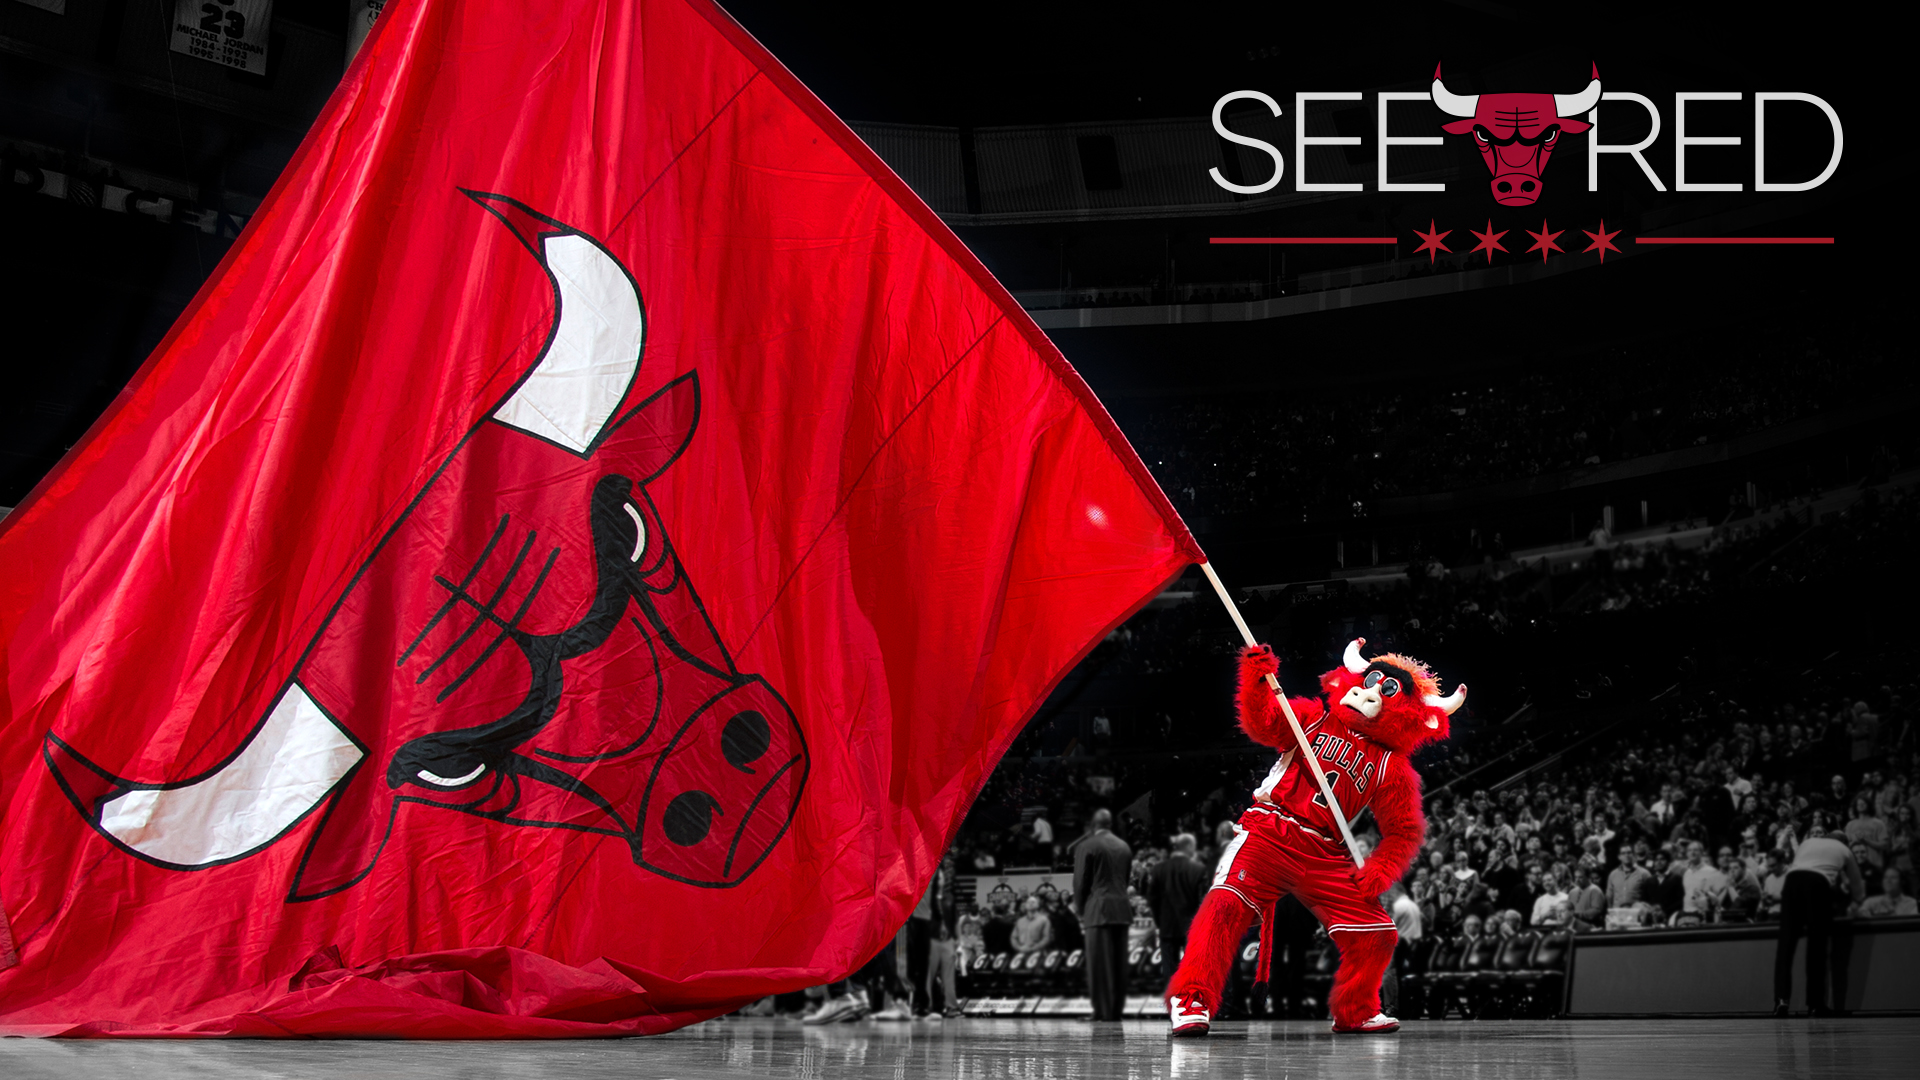 Chicago Bulls 2014 NBA Playoffs See Red